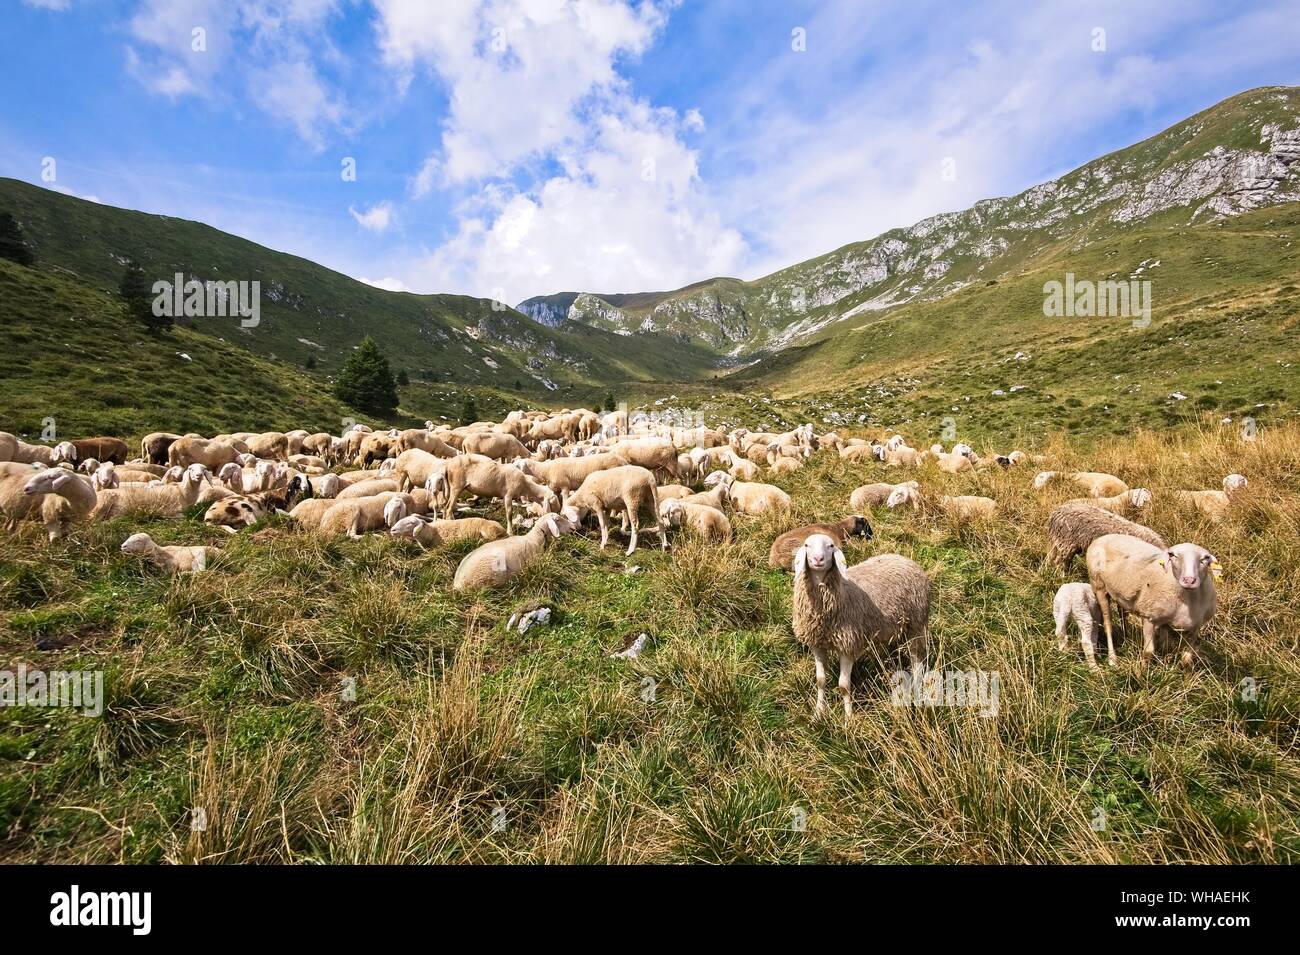 Livestock farm, flock of sheep in mountains. Stock Photo